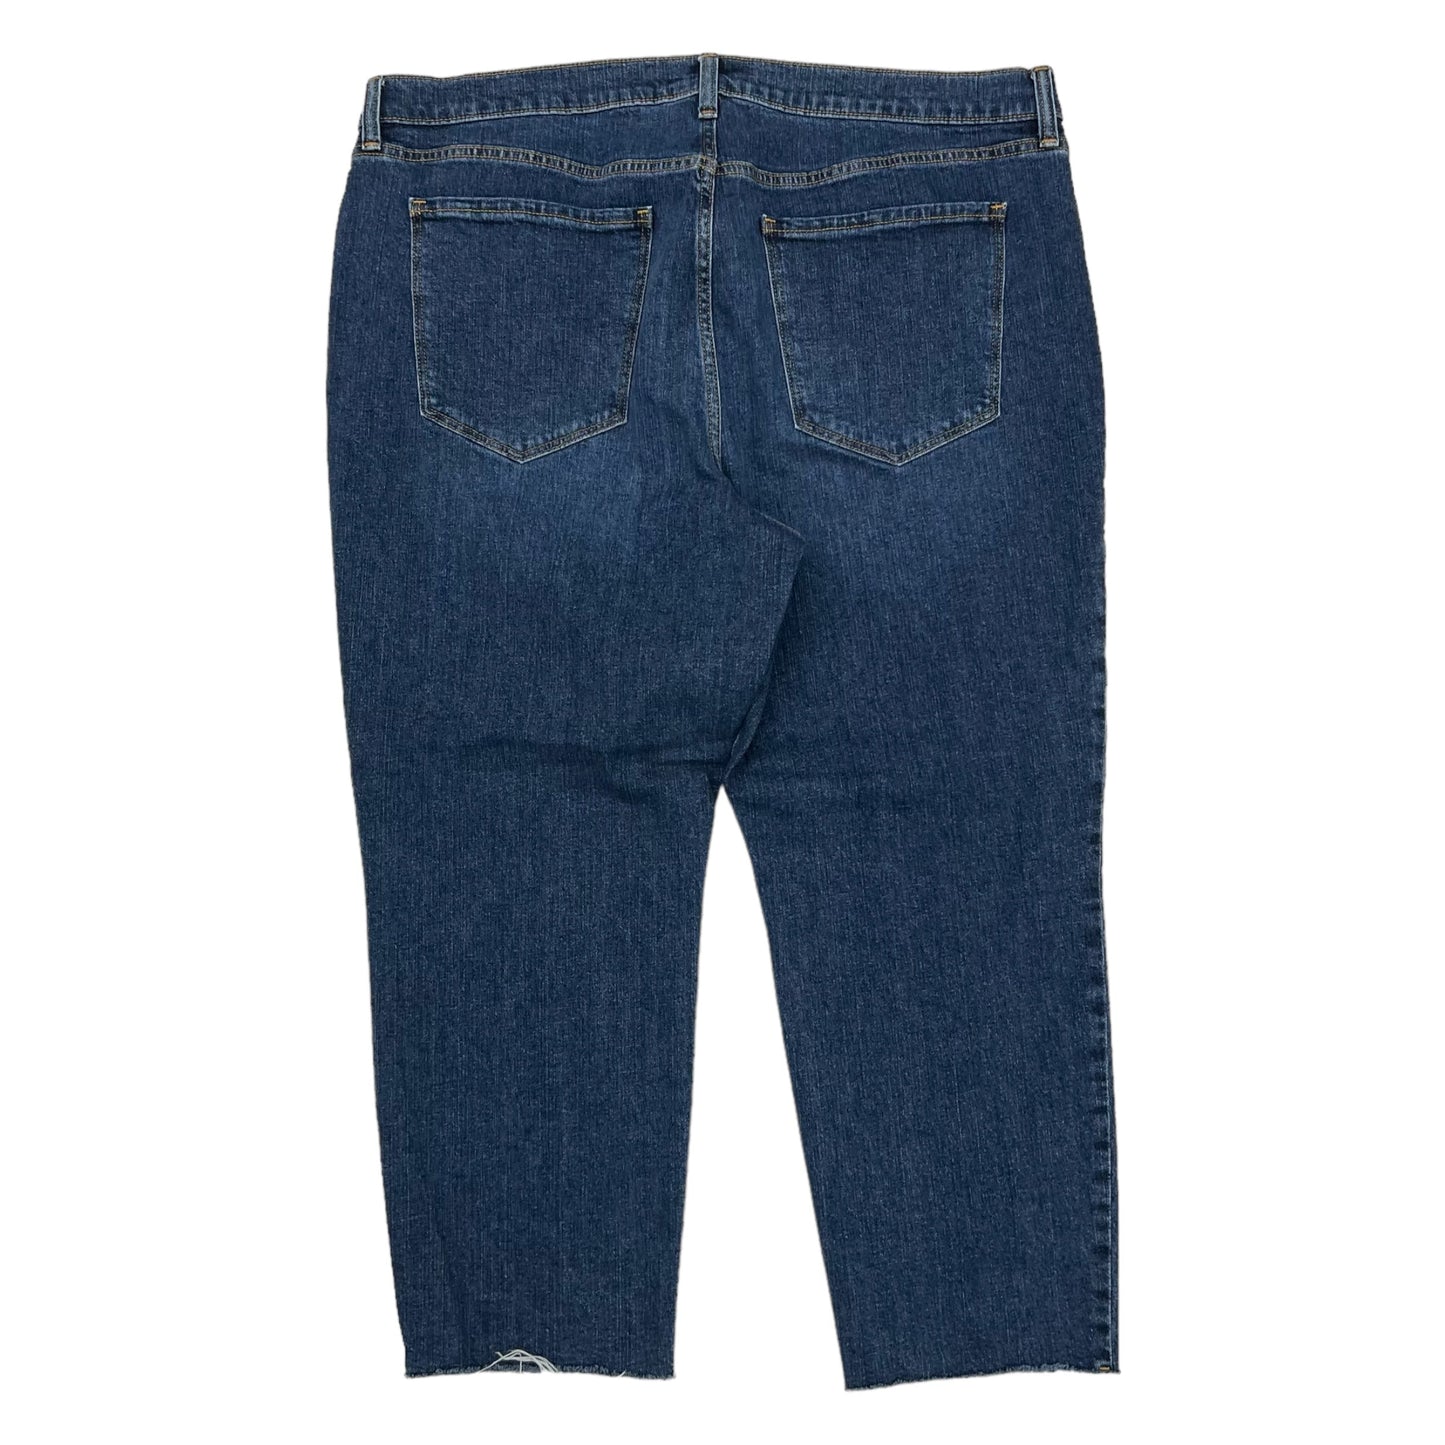 Jeans Boyfriend By Old Navy  Size: 18